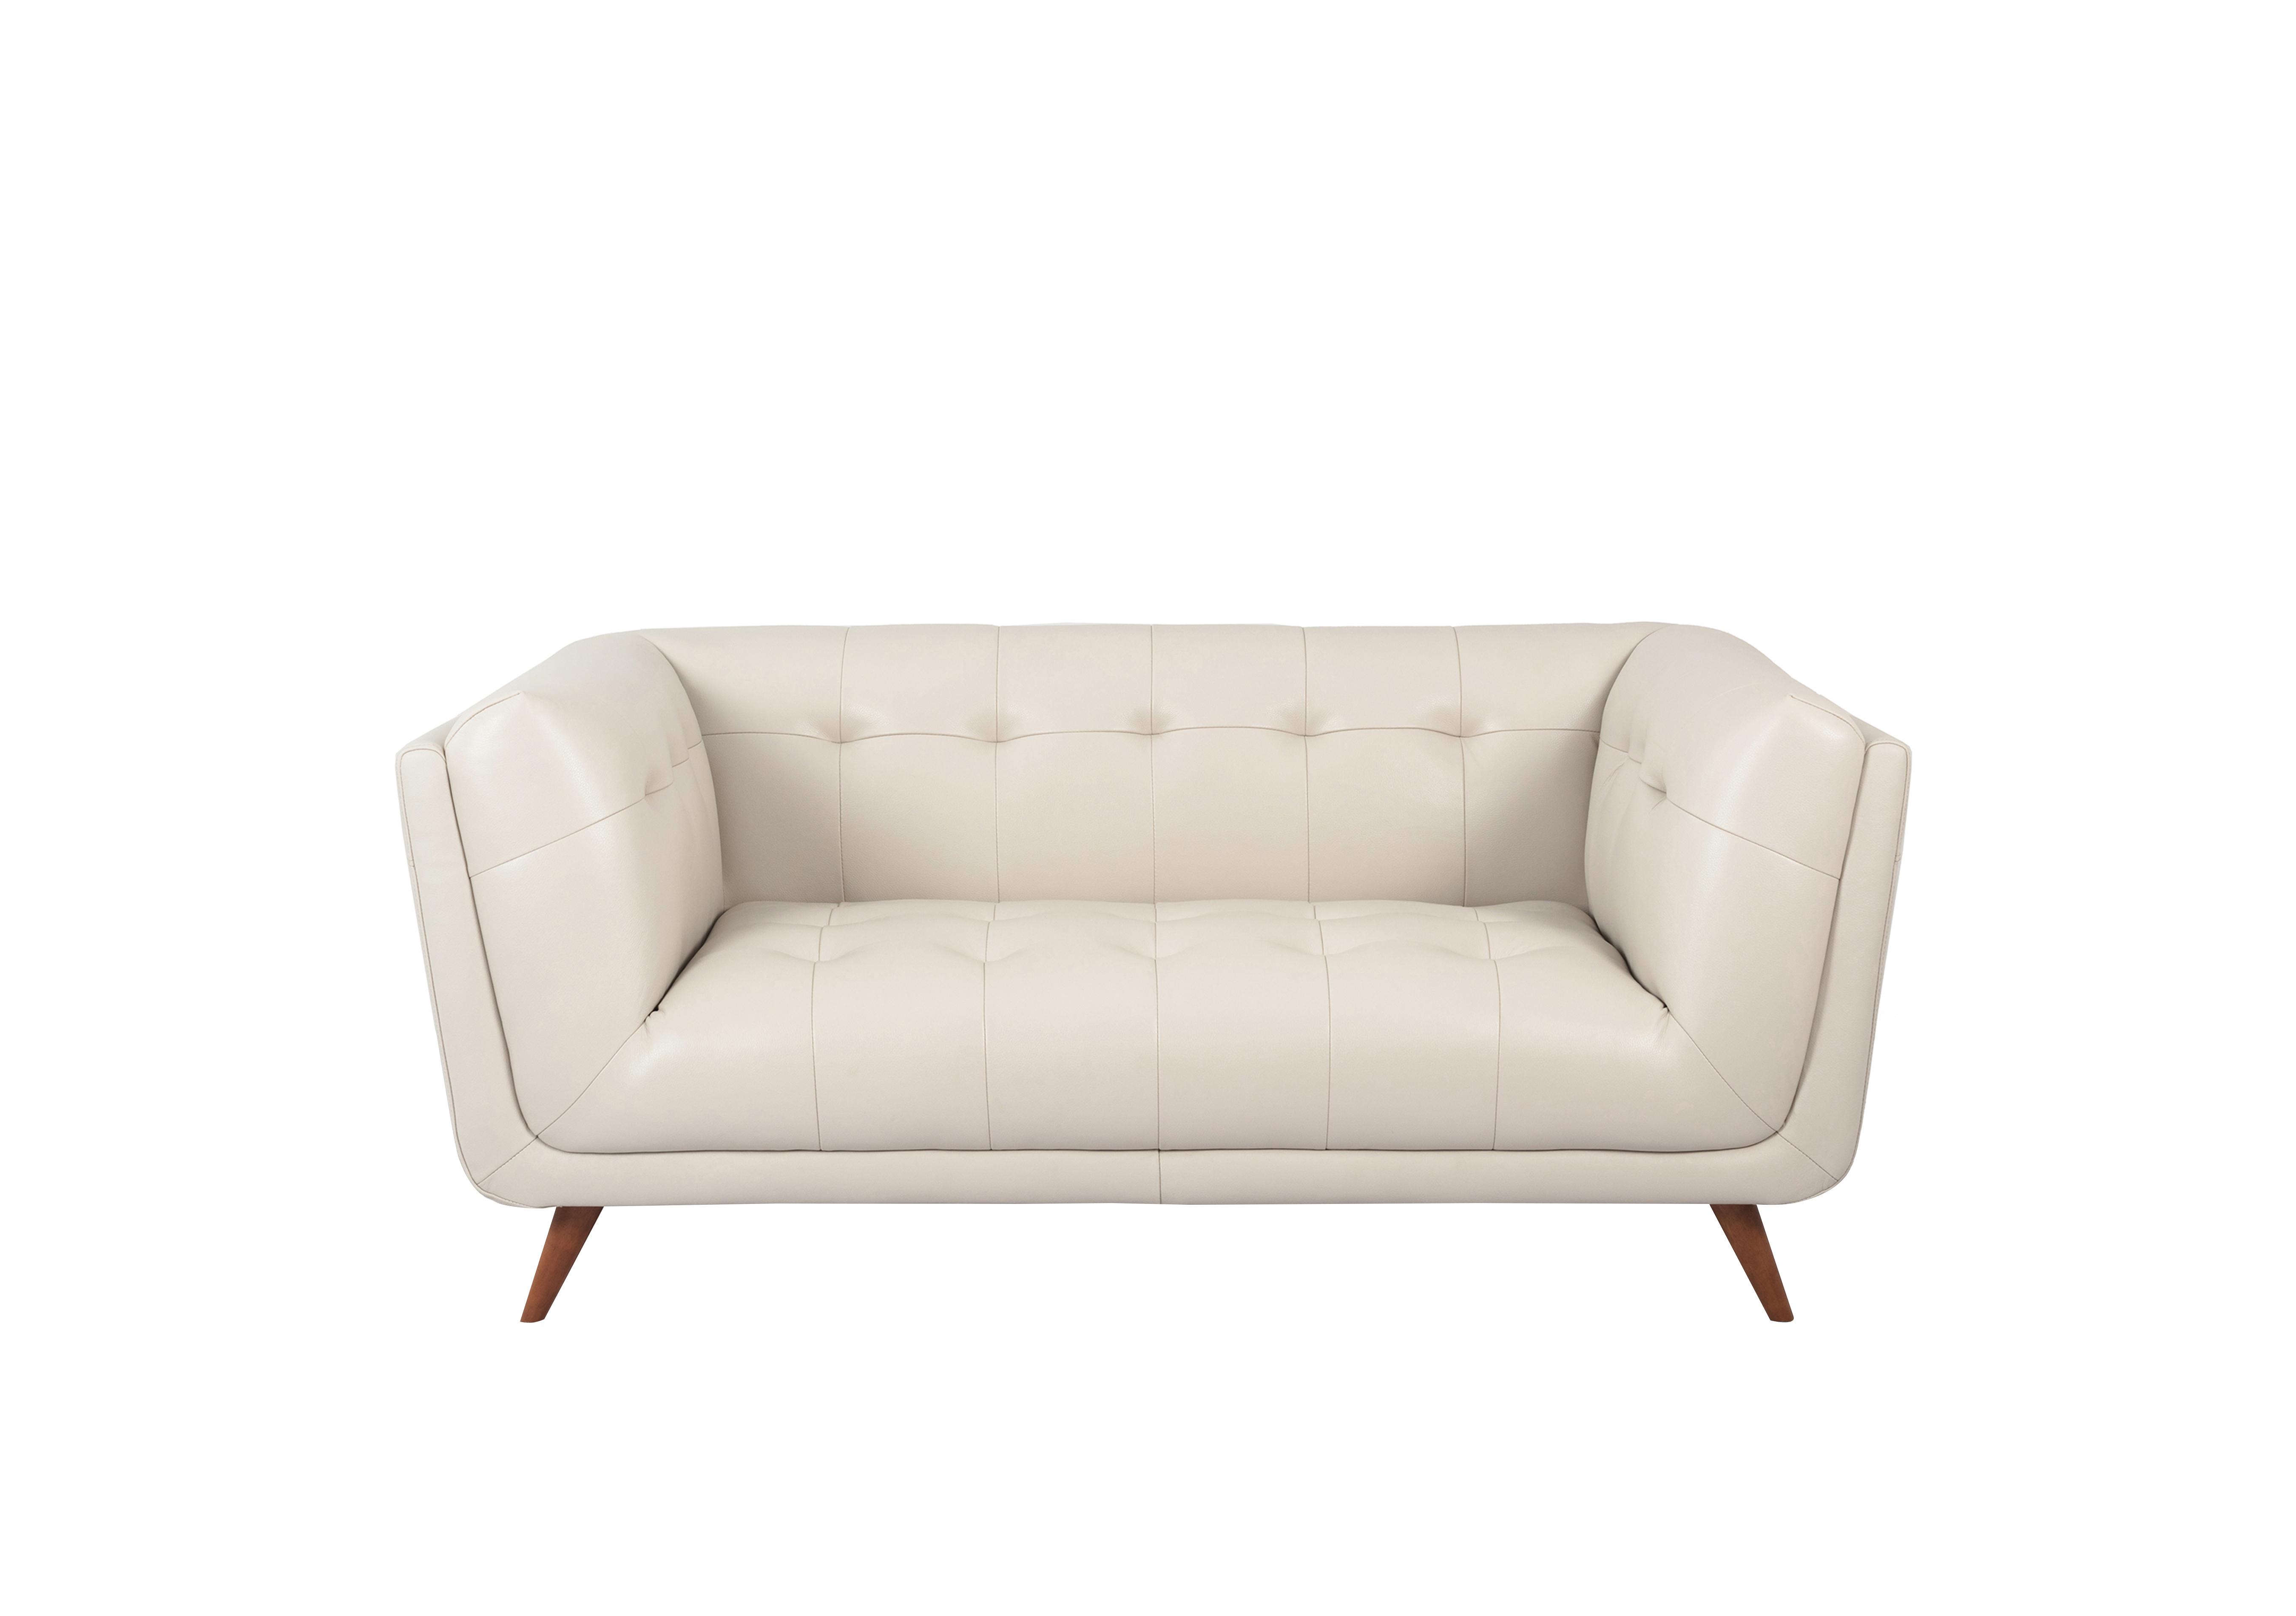 Rene 2 Seater Leather Sofa in Montana Cotton on Furniture Village